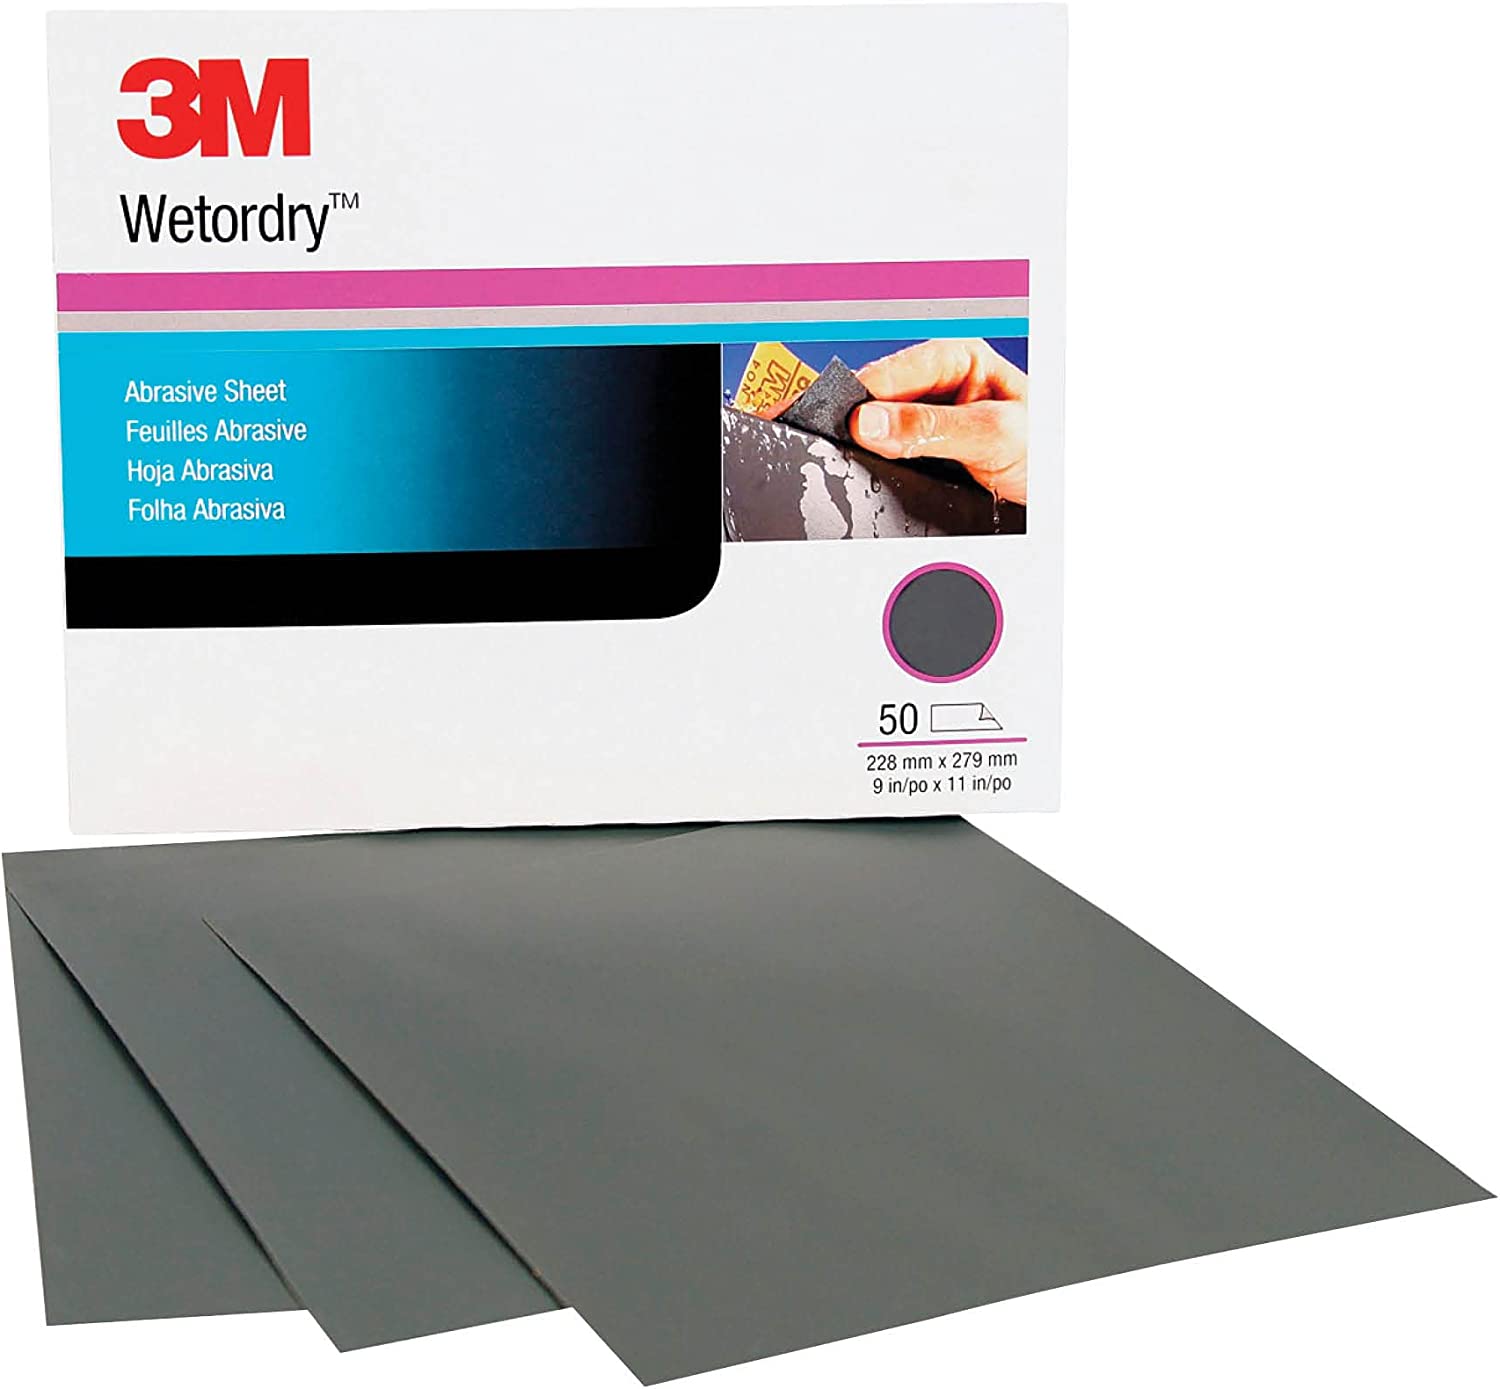 3M Wetordry Abrasive Sheet 413Q 02004 320+ Grit 9 in x 11 in Pack of 50 Sandpaper Sheets for Auto Sanding Metal Sanding Finishing Paint Prep